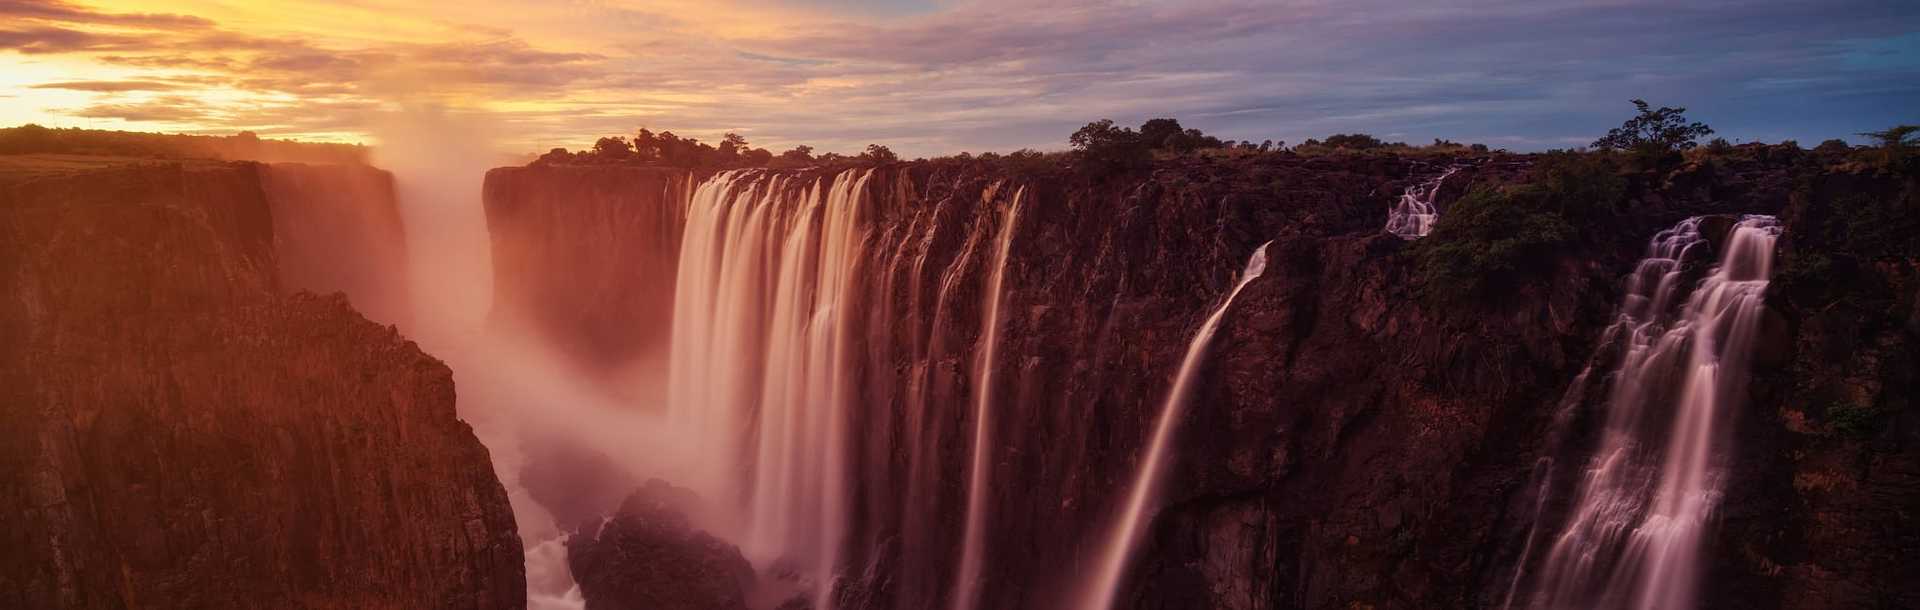 Victoria Falls at sunset in Zambia/Zimbabwe, Africa